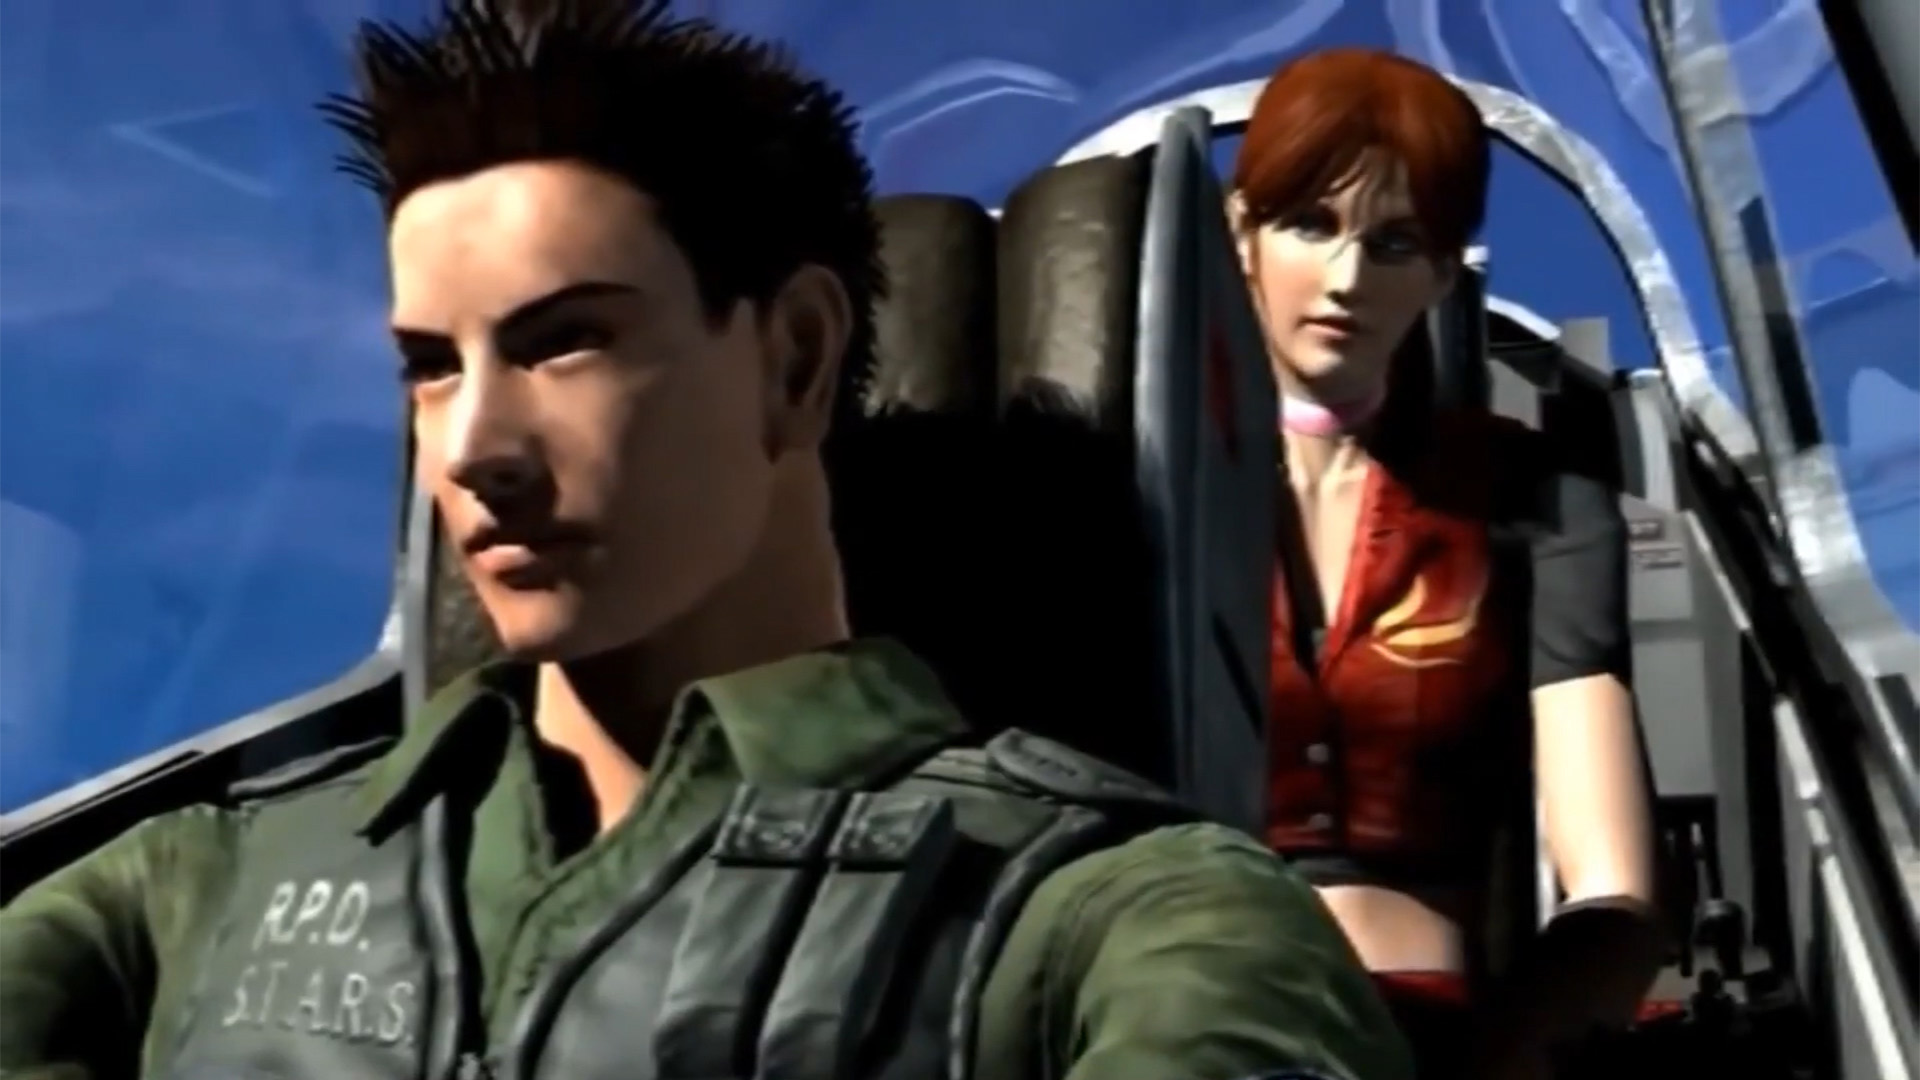 Veja videos da beta de Resident Evil CODE: Veronica - REVIL